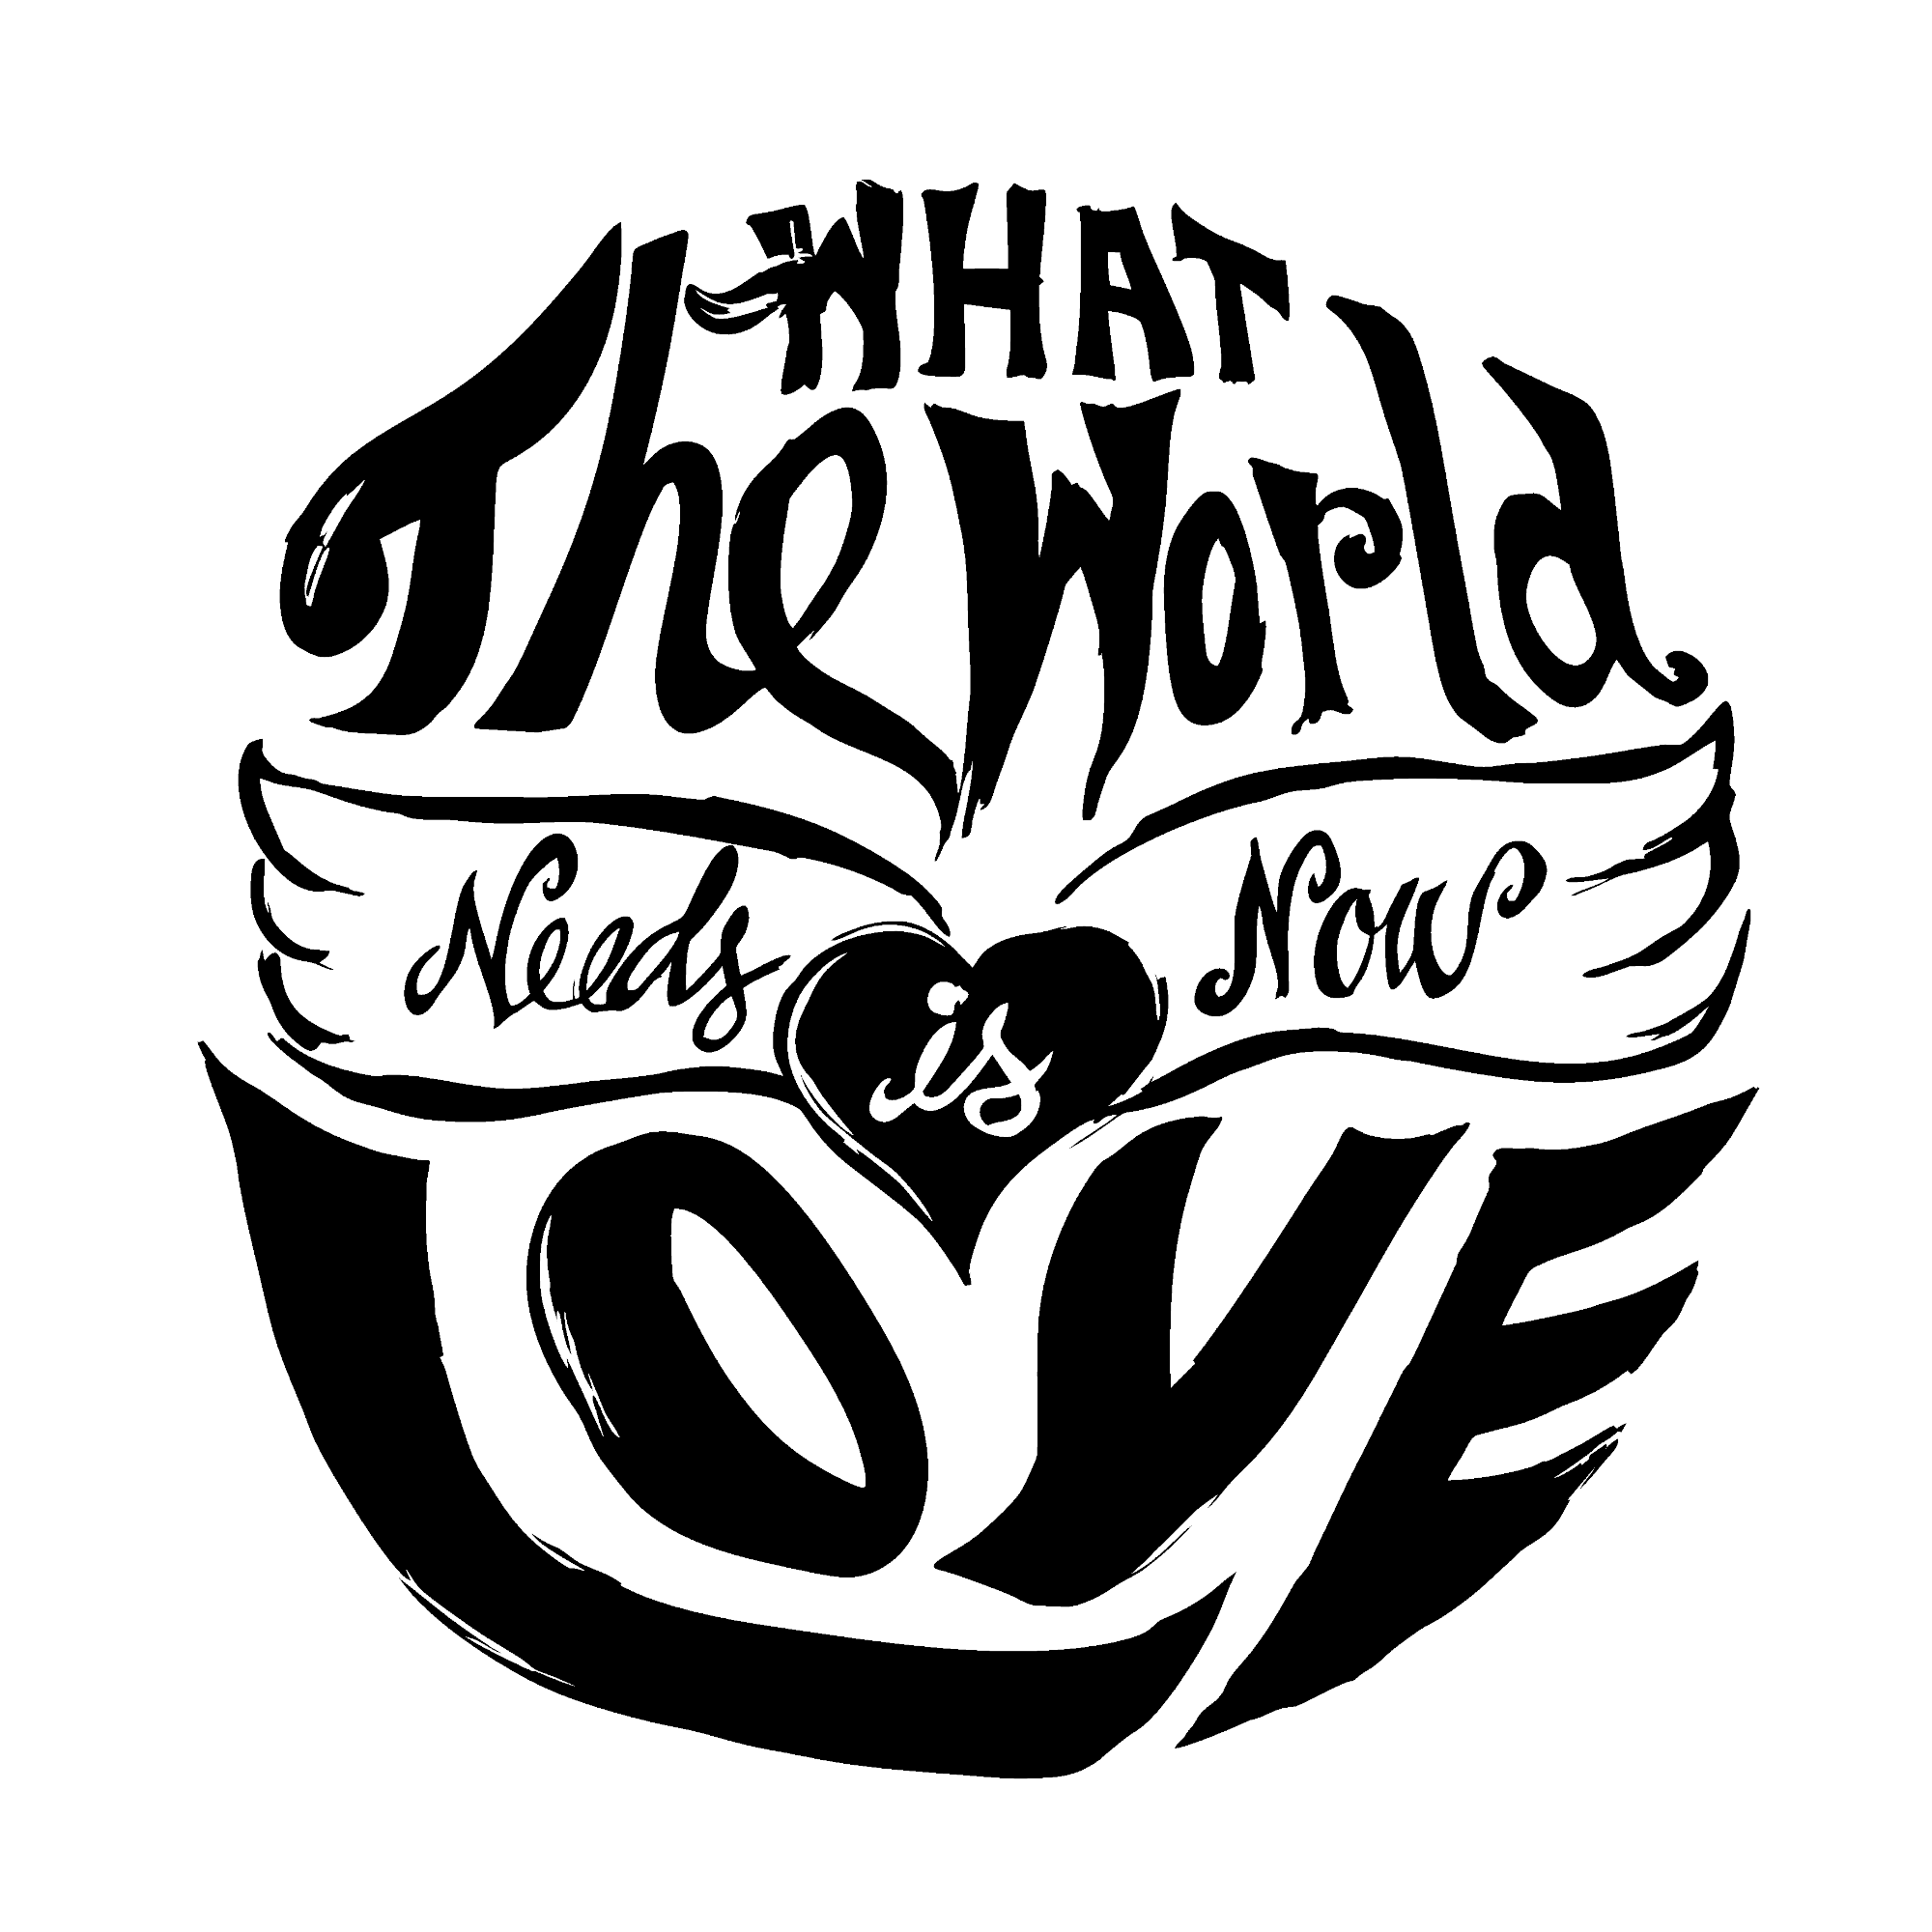 The World needs Love